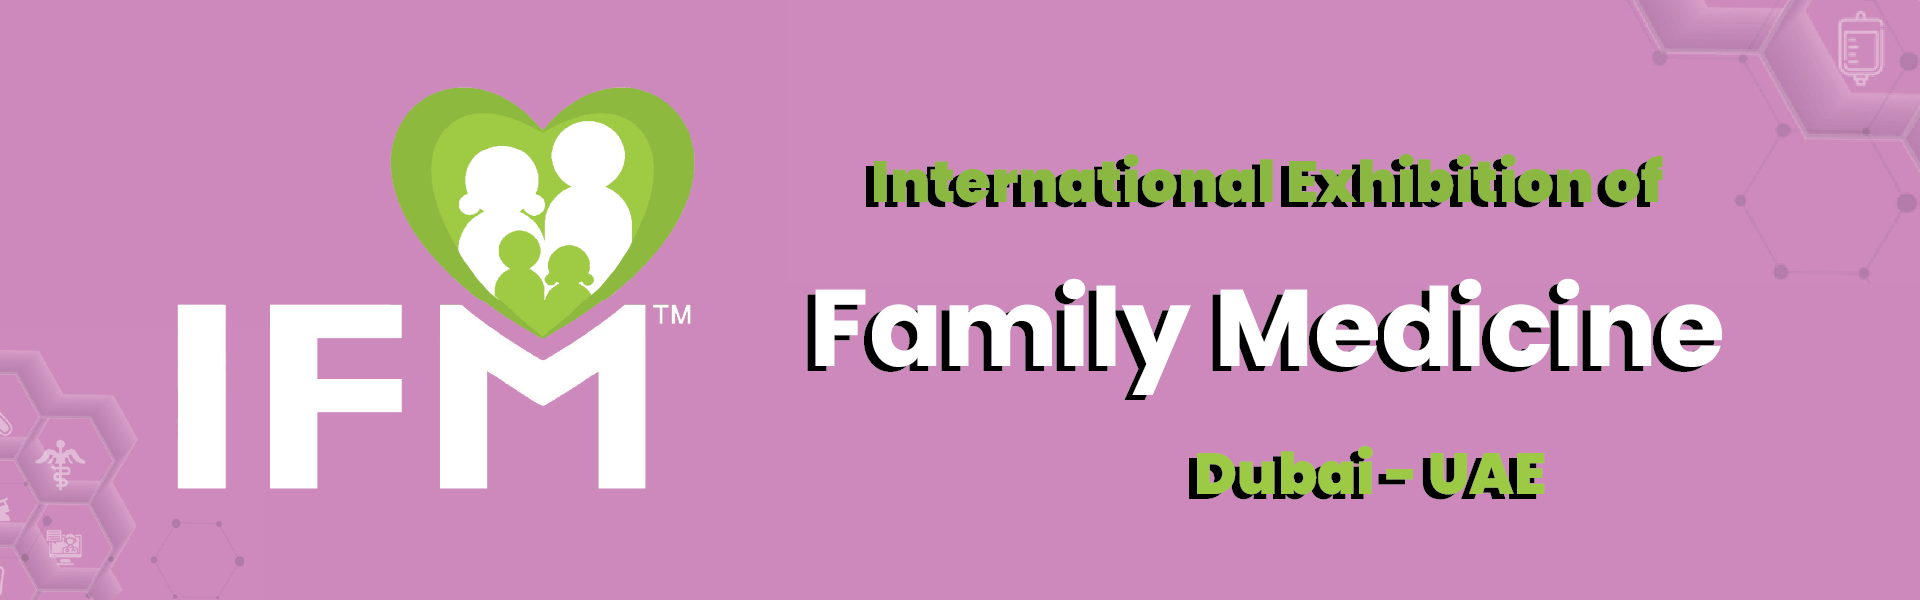 International Family Medicine (IFM) Exhibition Dubai United Arab Emirates